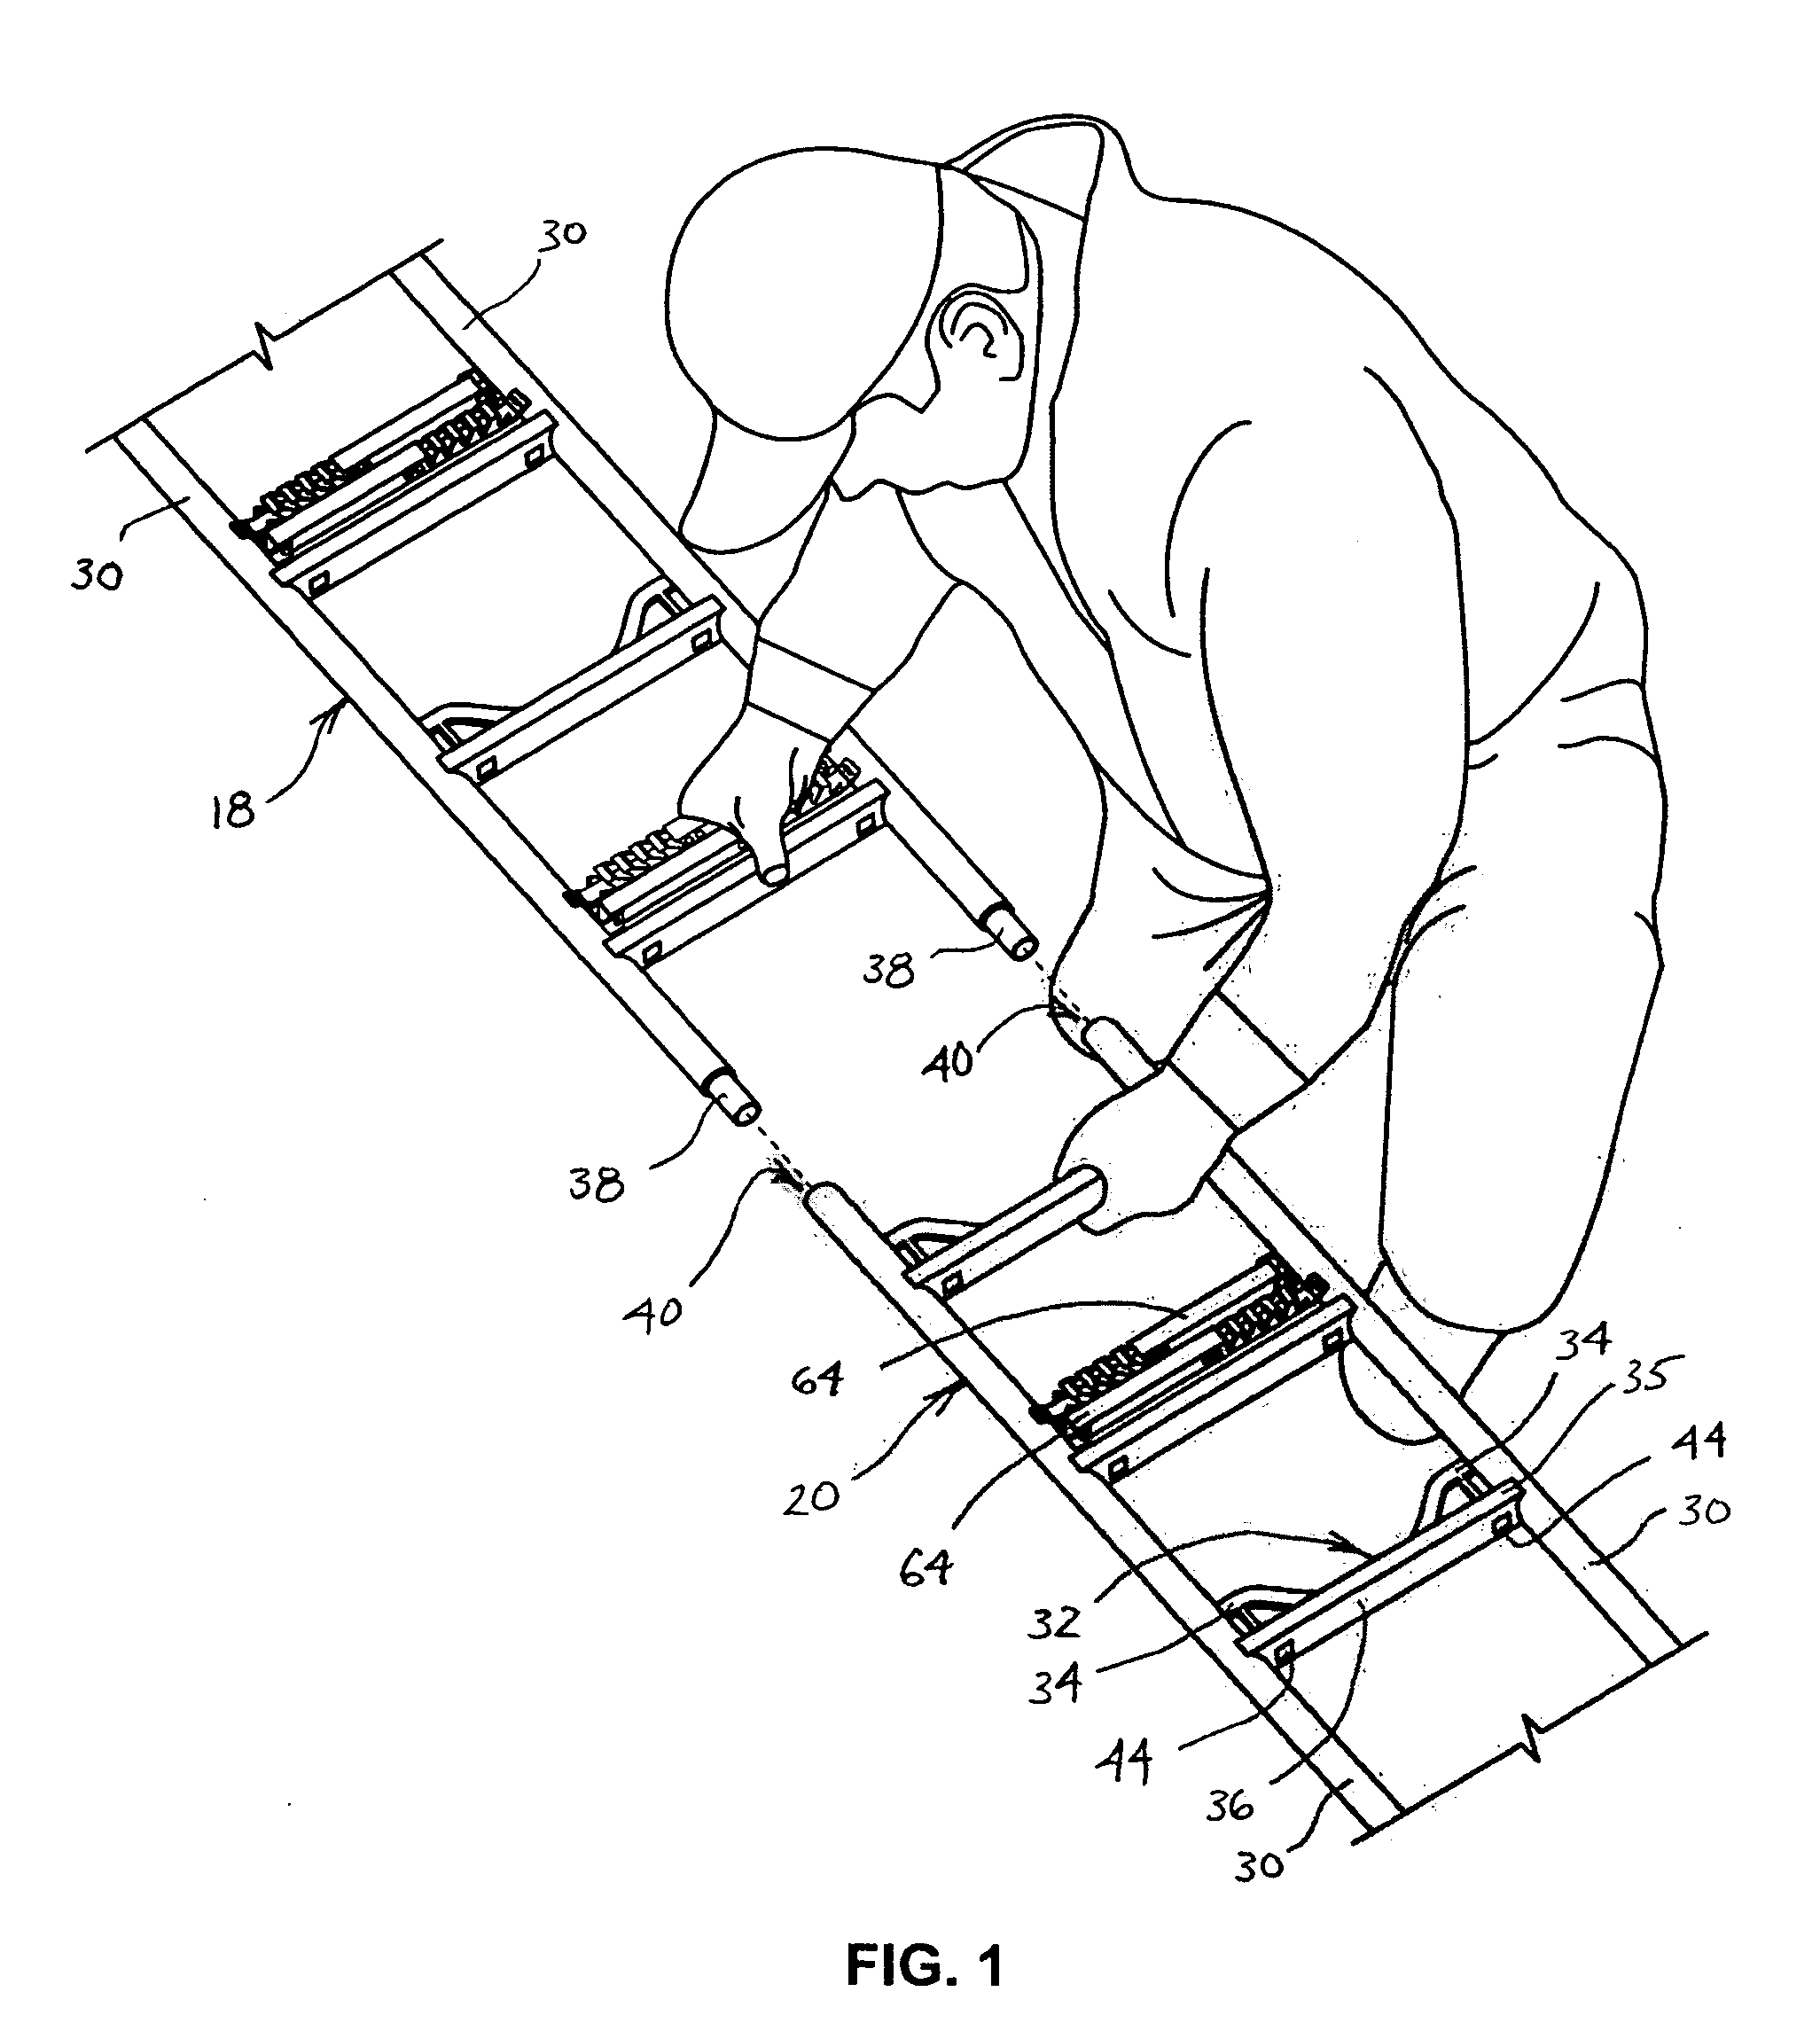 Ladder stand with platform hoist and method of assembling same